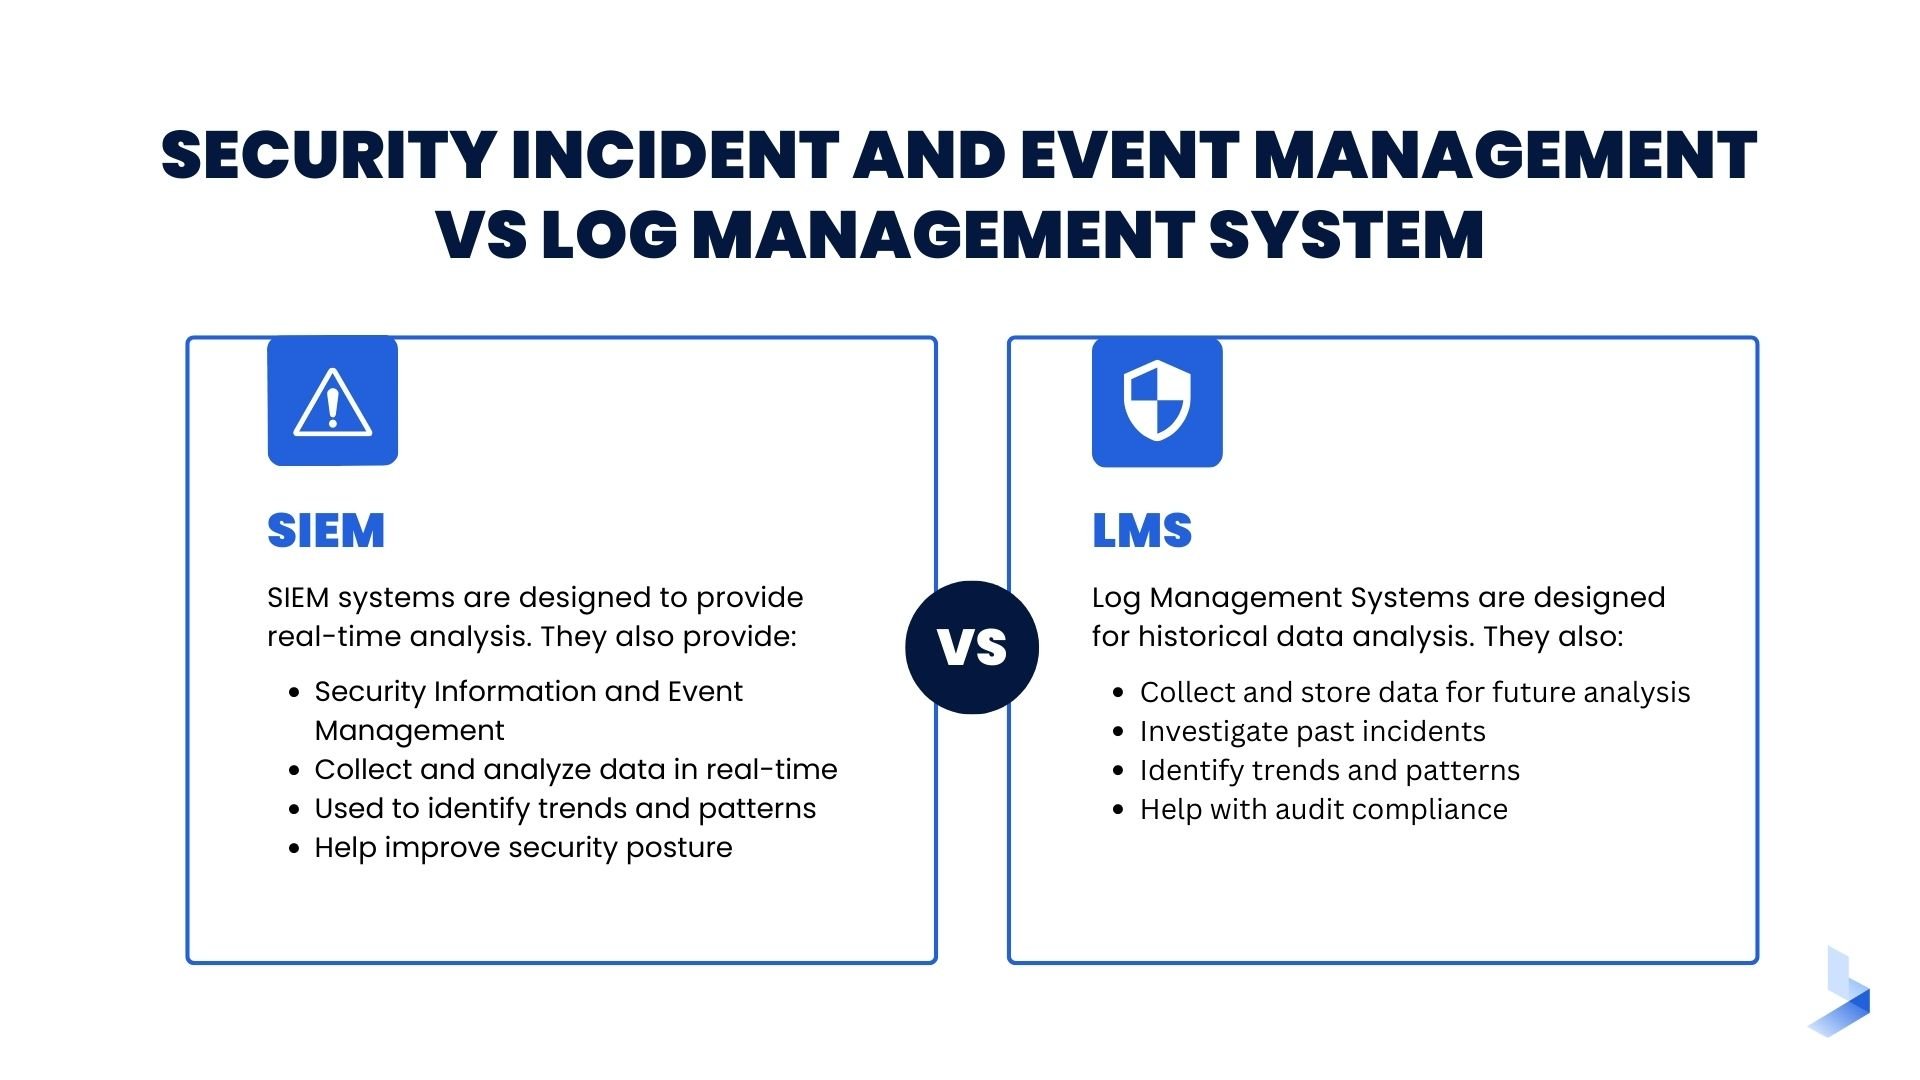 SIEM vs Log Management Systems